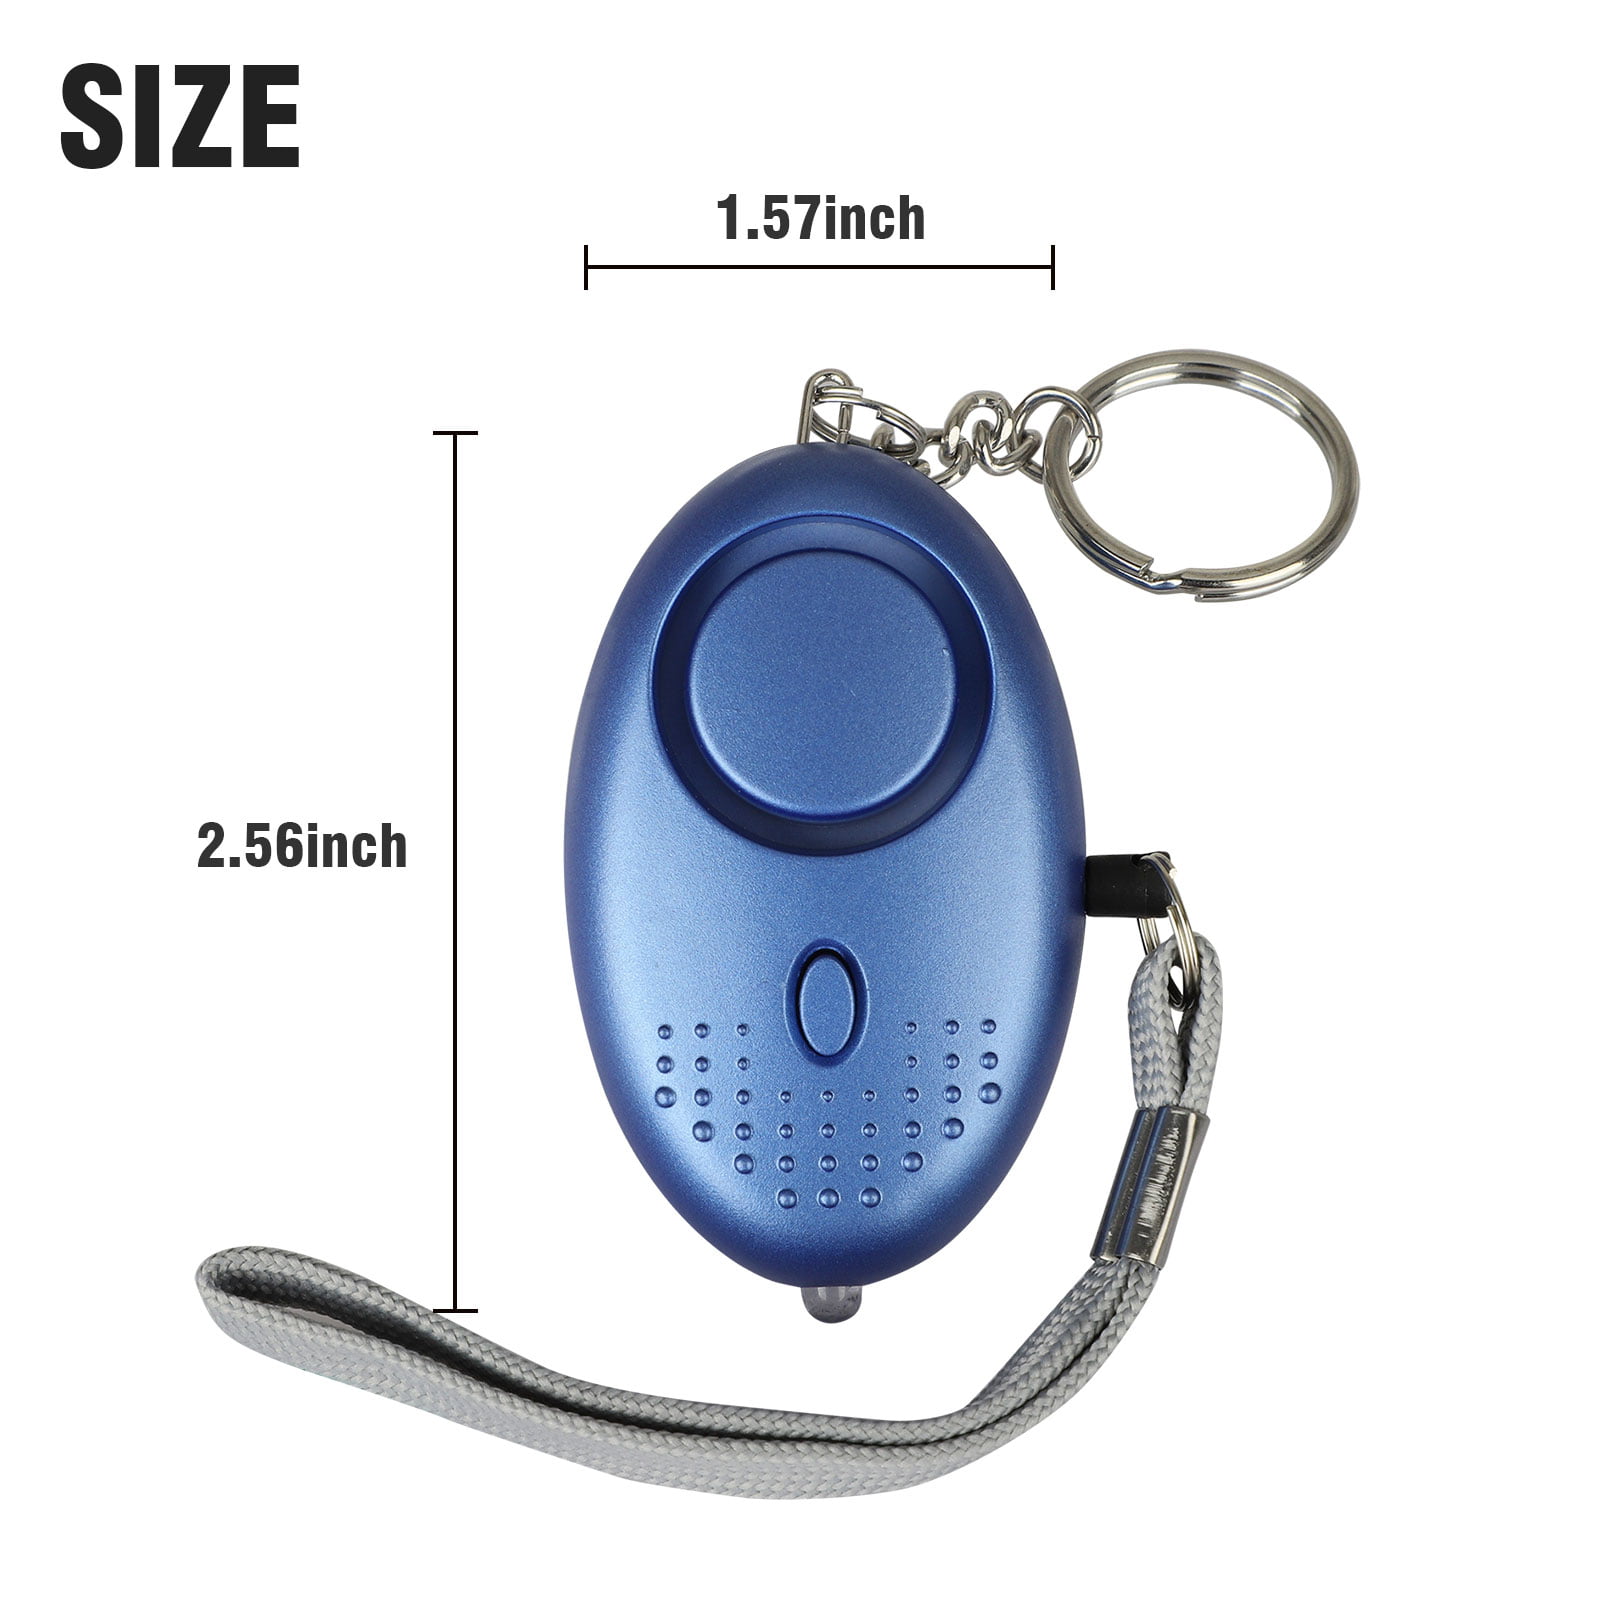 New 140db Emergency Personal Safety Alarm Keychain Self Defense for Elderly Kids 